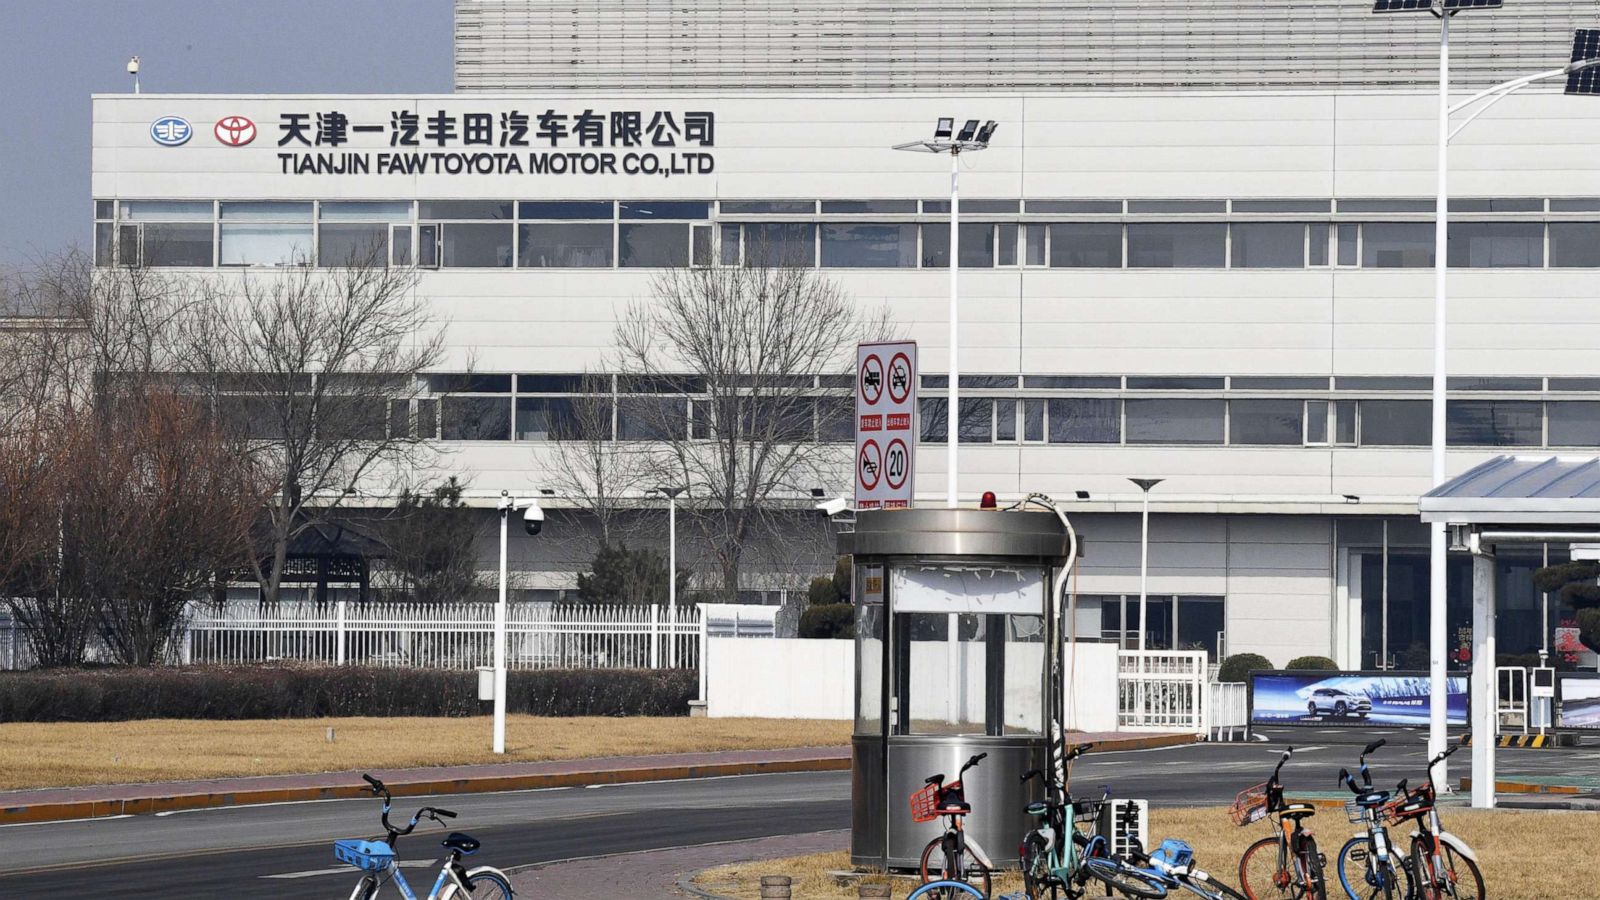 Carmakers slowly resuming production in China despite coronavirus outbreak - ABC News